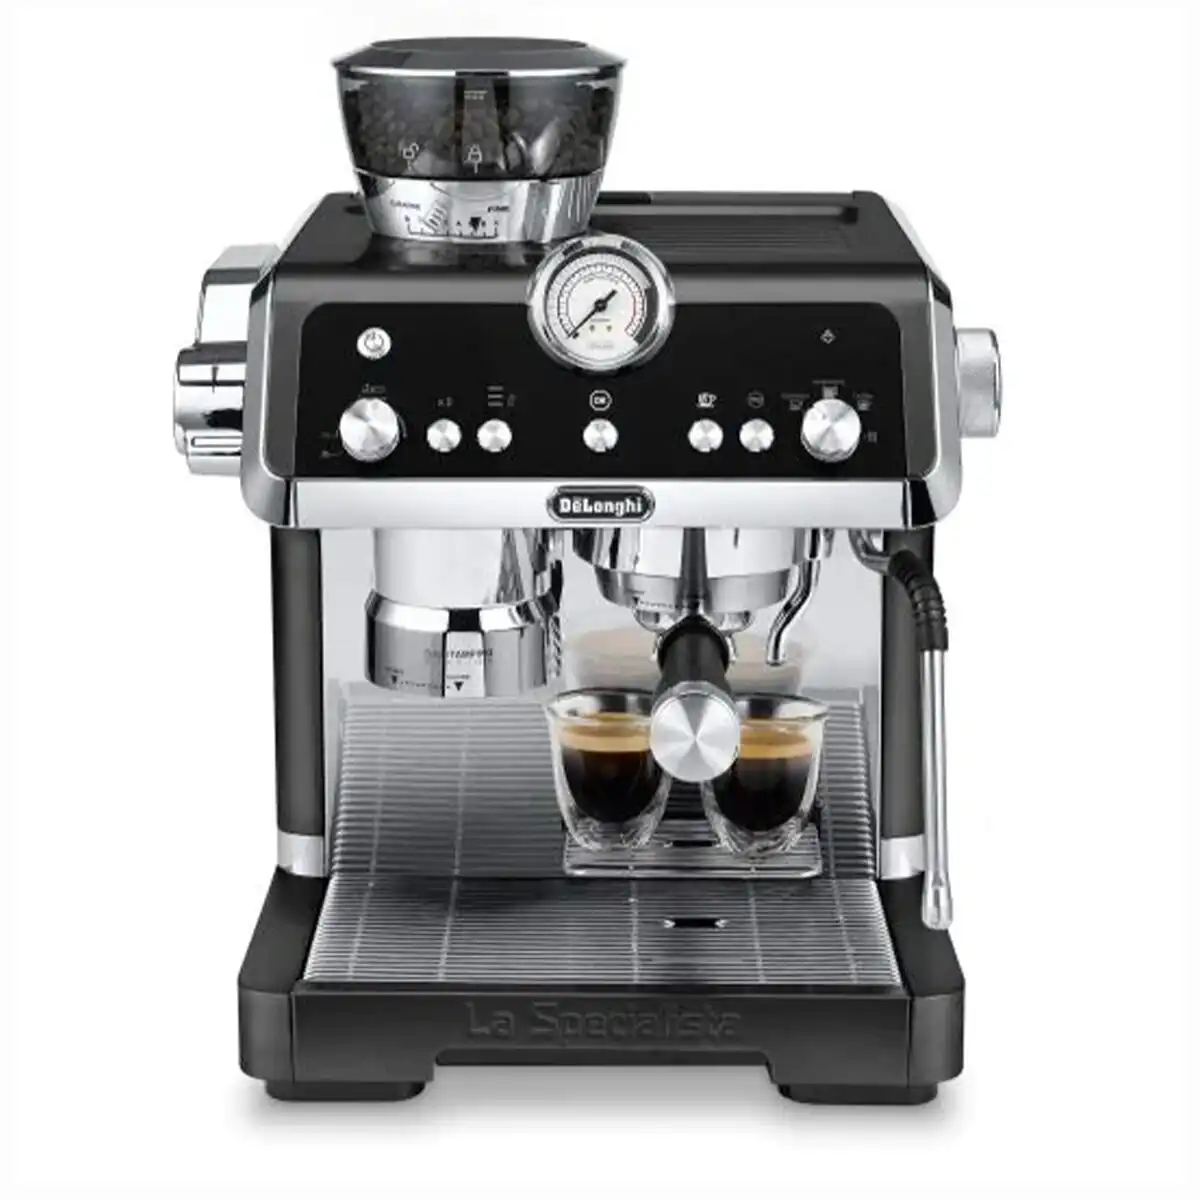 De'Longhi La Specialista Prestigio Manual Coffee Machine Black